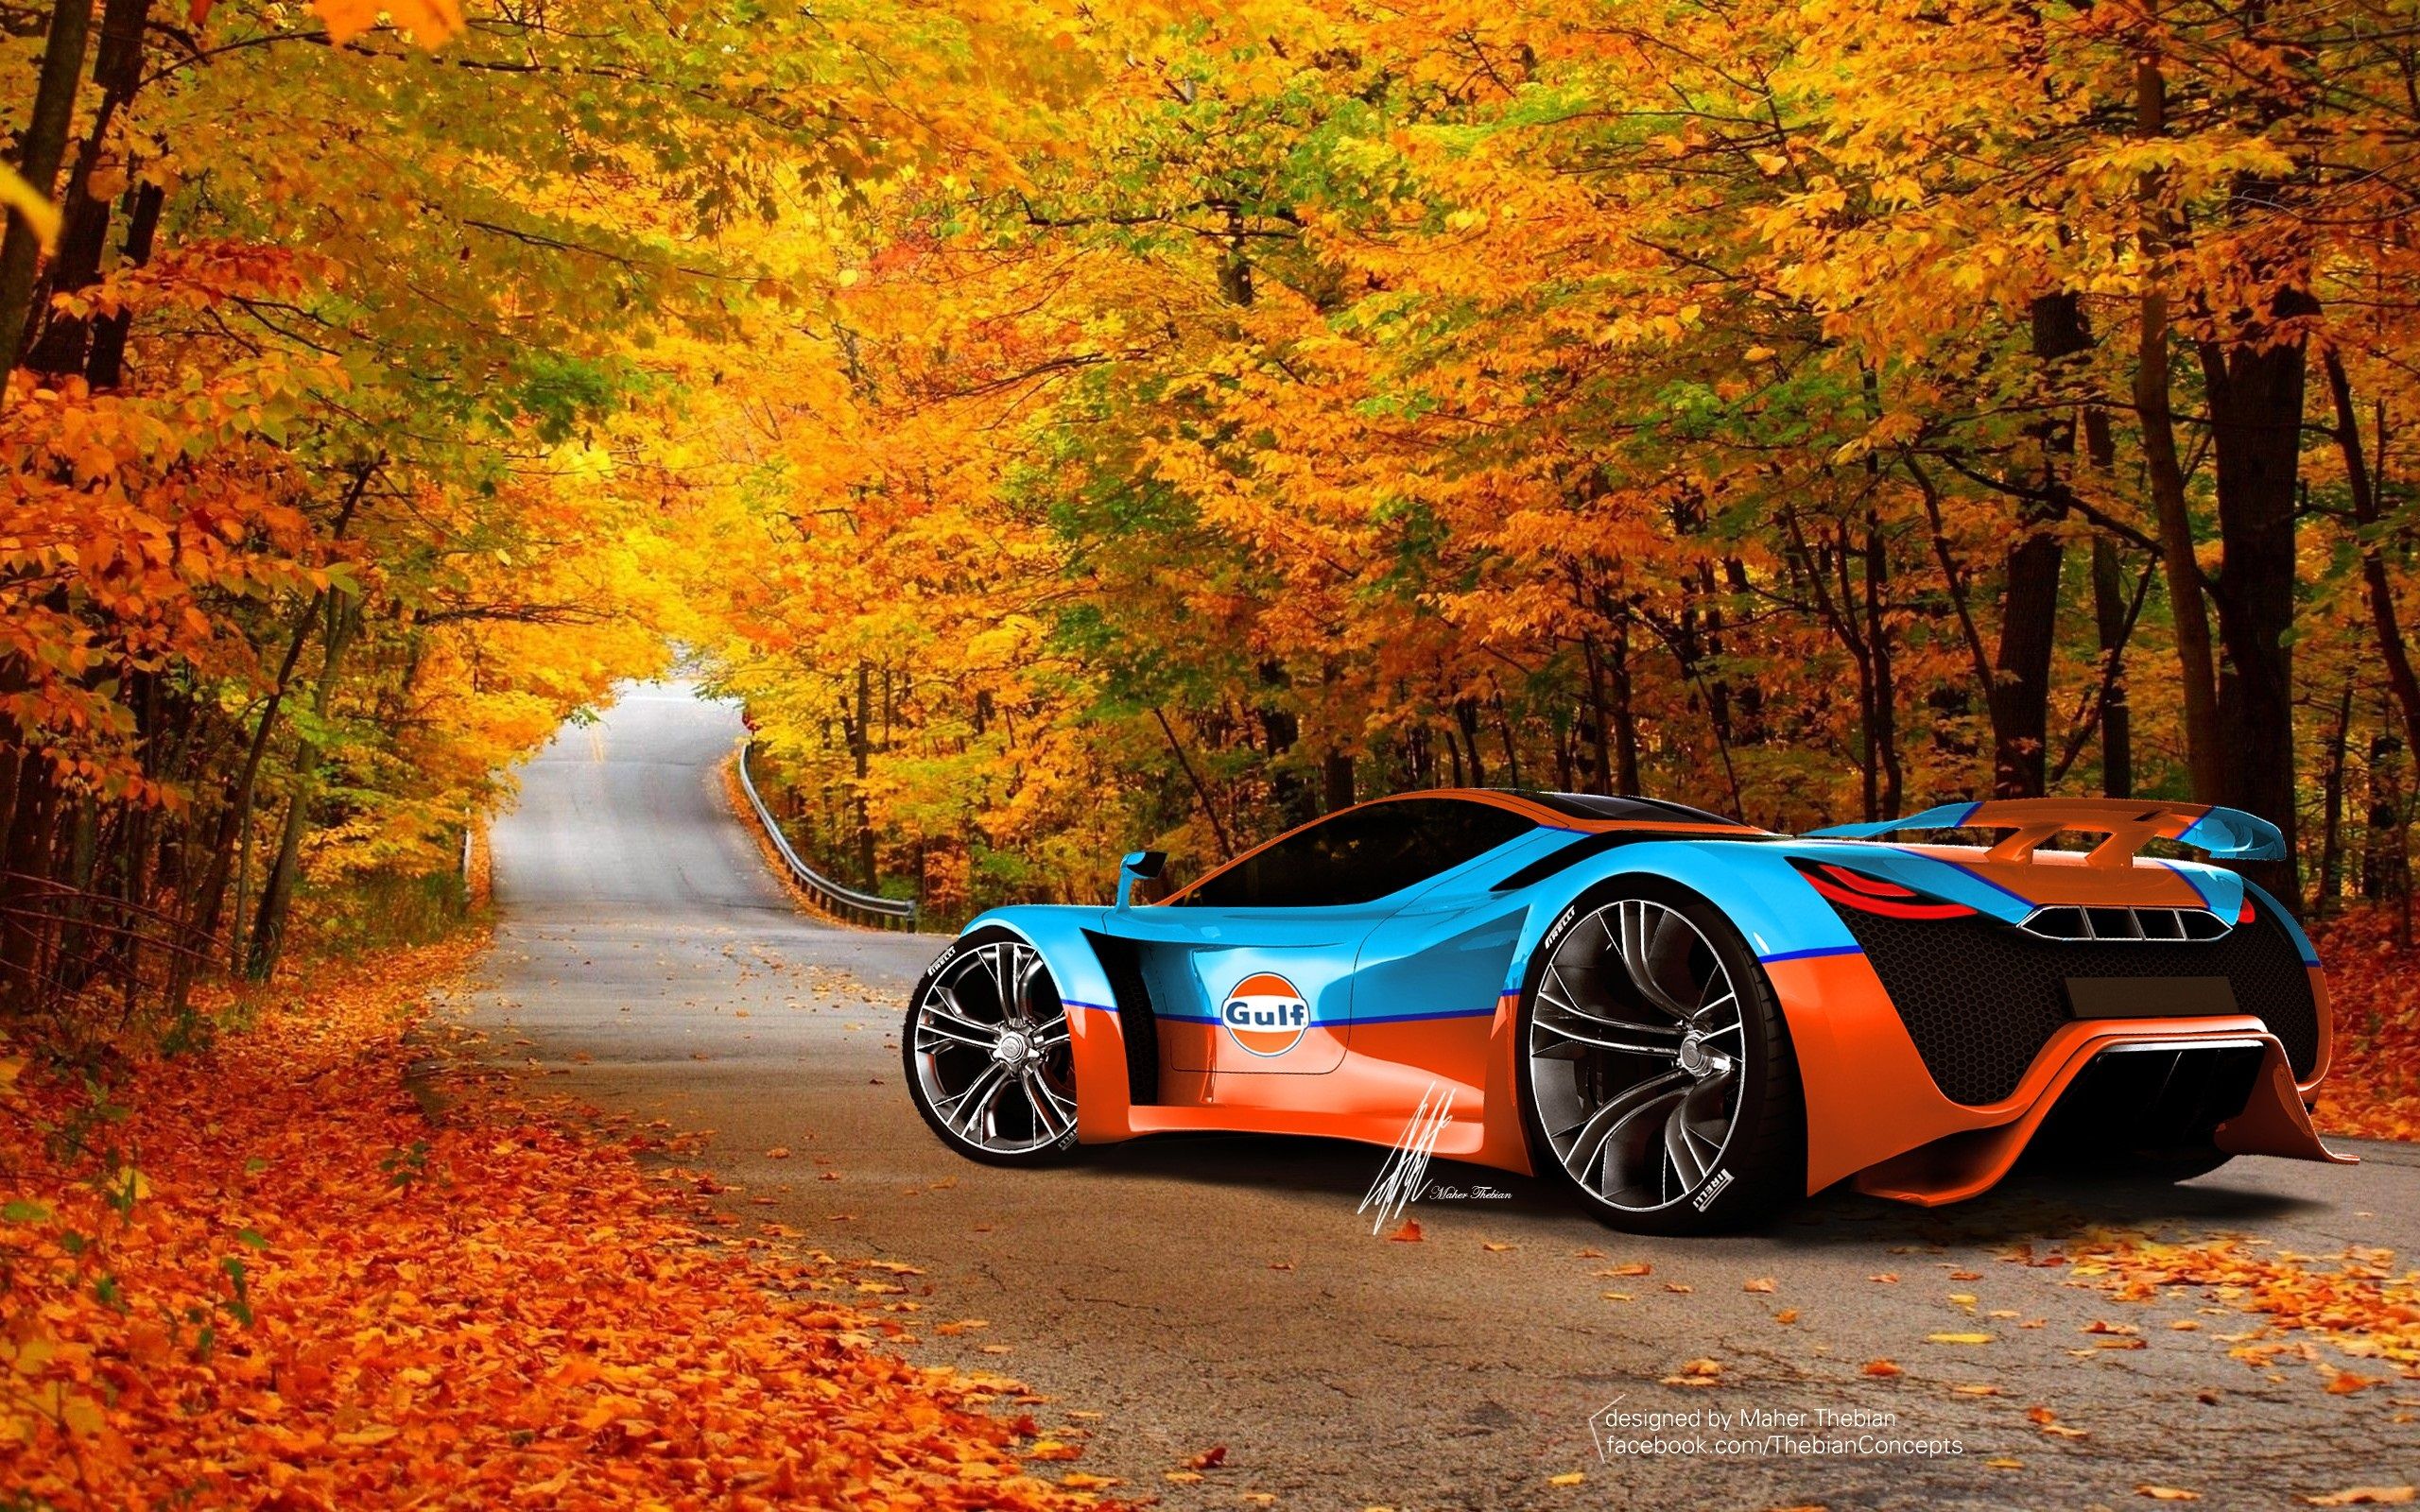  Coole Auto Hintergrundbild 2560x1600. Coole Ferrari supercar im Herbst 2560x1600 HD Hintergrundbilder, HD, Bild